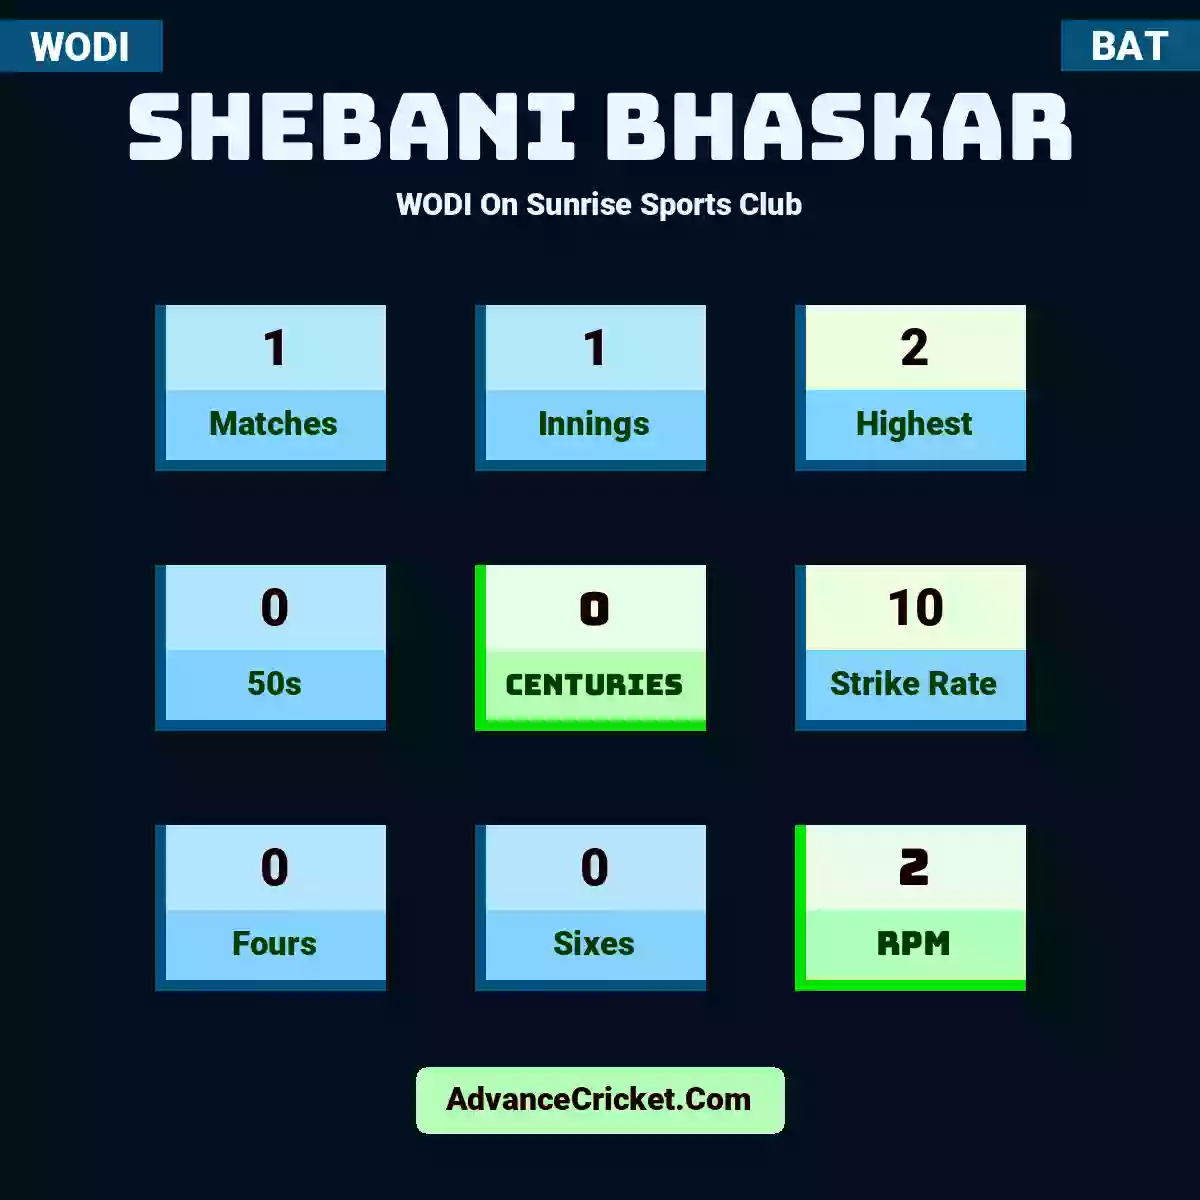 Shebani Bhaskar WODI  On Sunrise Sports Club, Shebani Bhaskar played 1 matches, scored 2 runs as highest, 0 half-centuries, and 0 centuries, with a strike rate of 10. S.Bhaskar hit 0 fours and 0 sixes, with an RPM of 2.